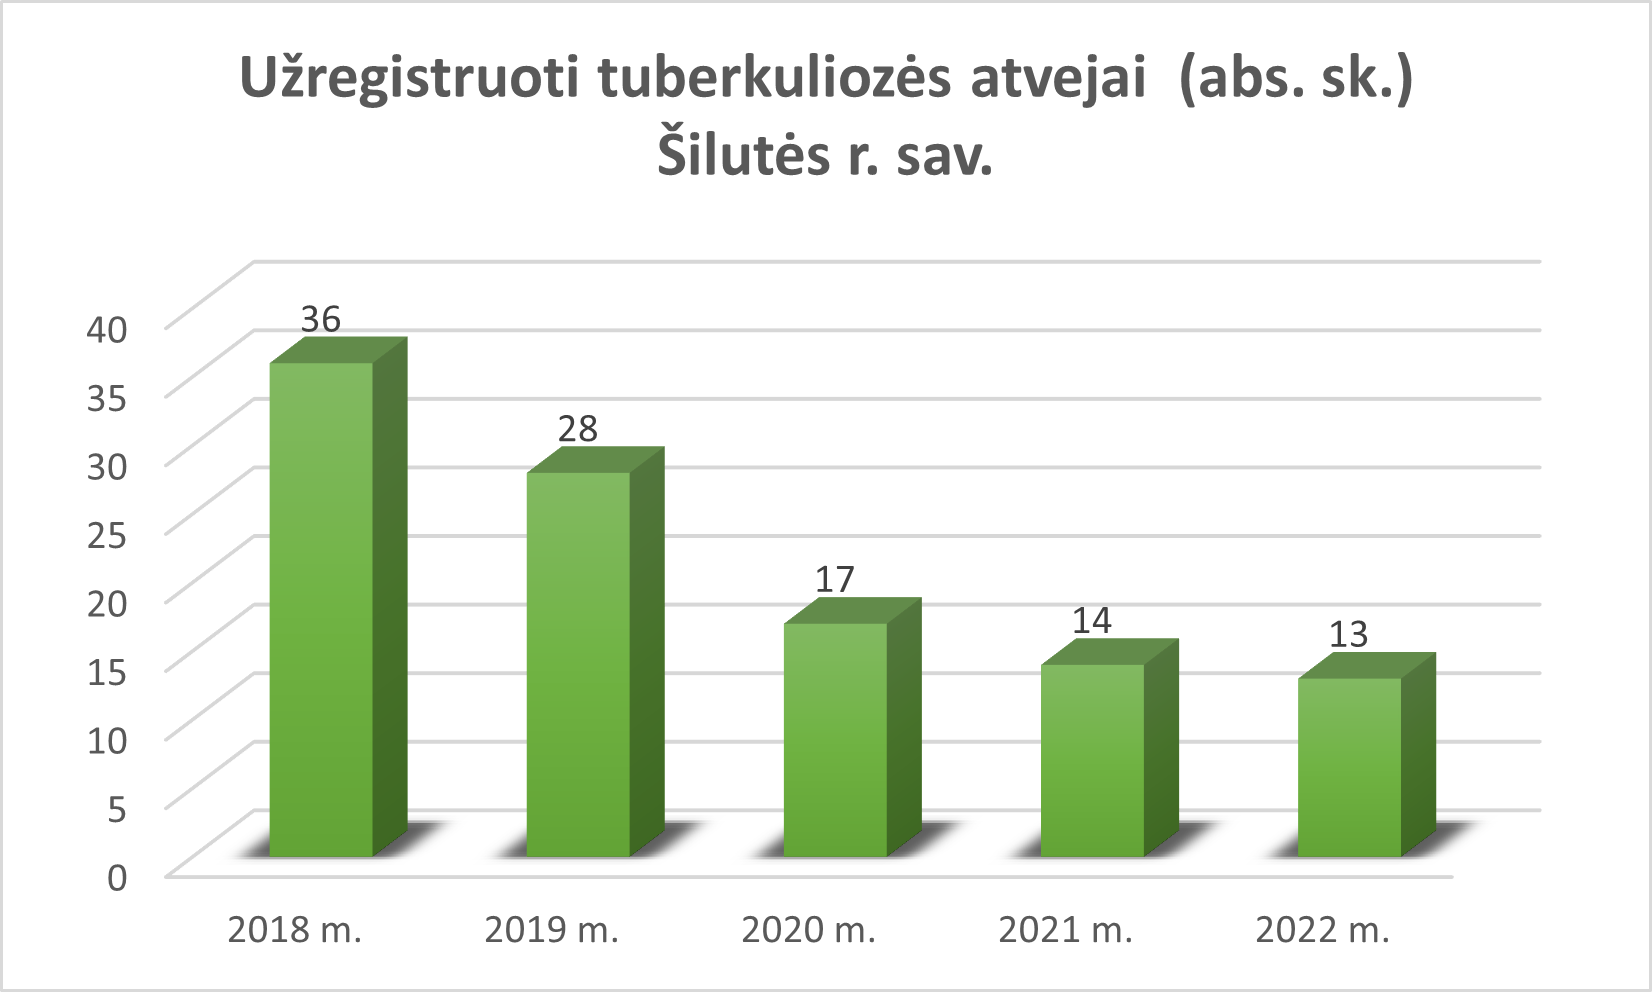 tuberkuliozes-apzvalga-silutes-r-sav-2018-m-–-2022-m.